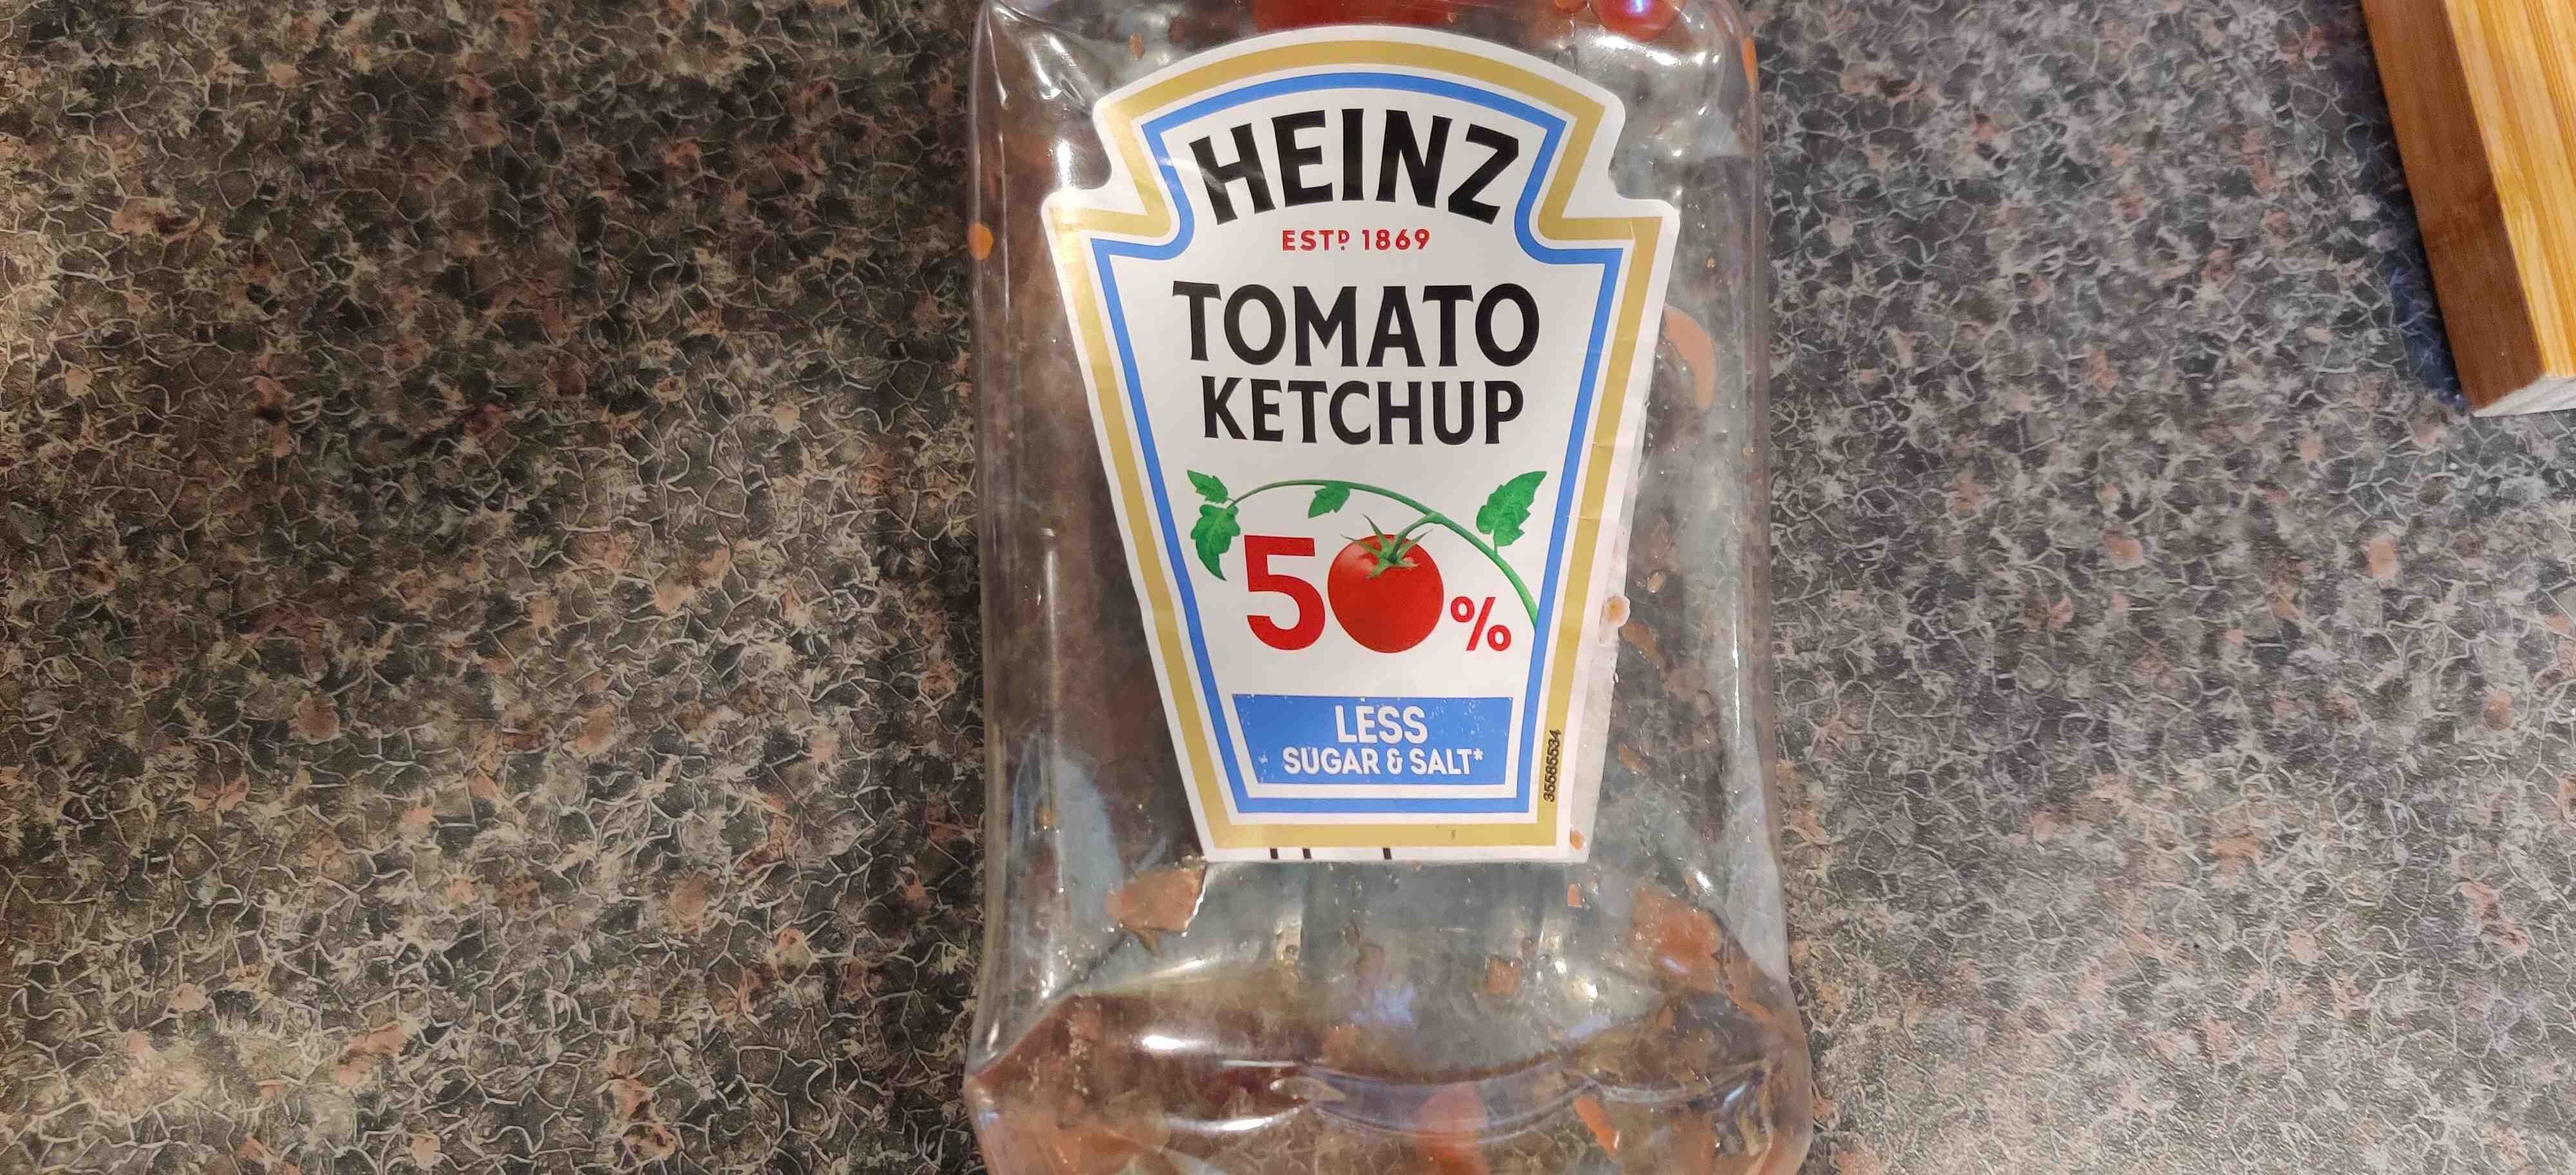 Tomato ketchup 50% less sugar and salt - Product